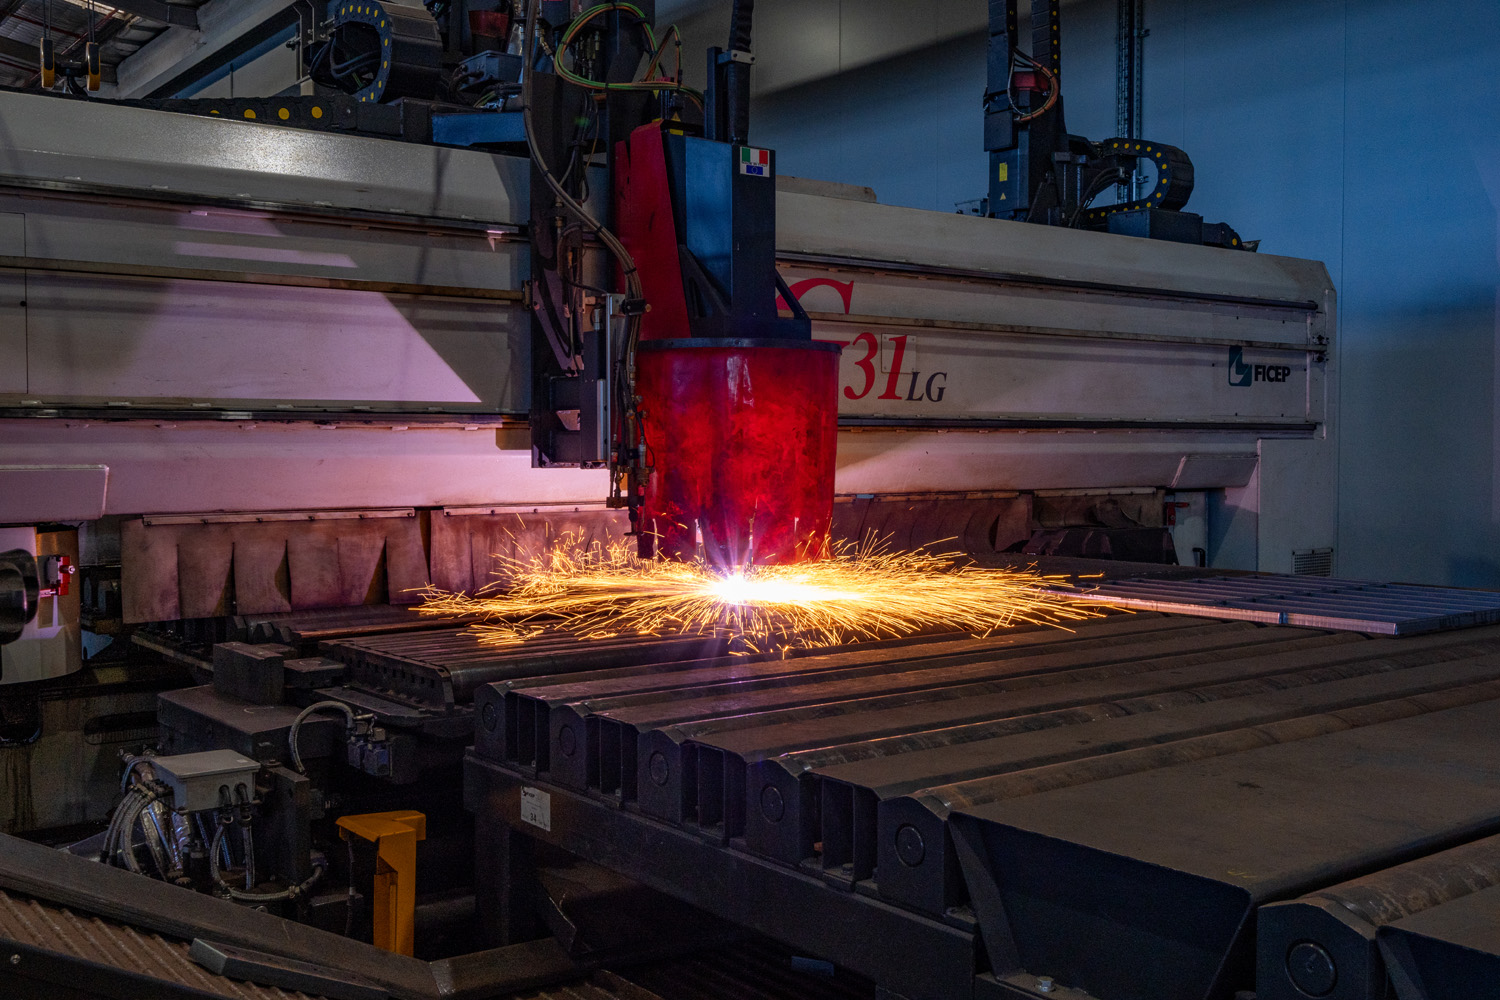 Steel fabrication machine working on fabricating metal